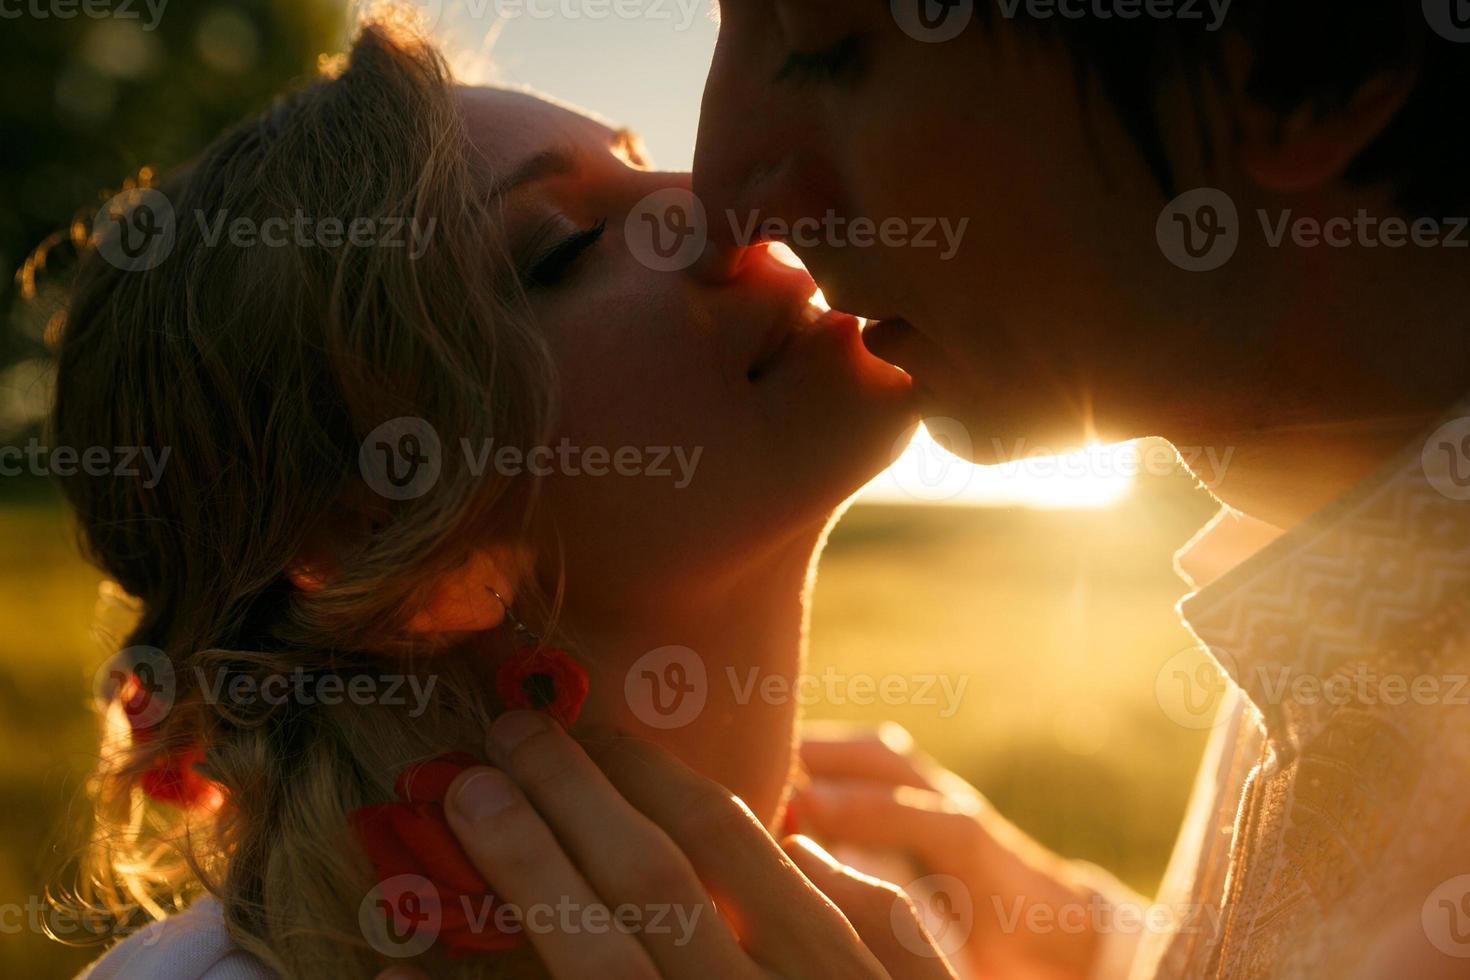 par kissing på de solnedgång foto